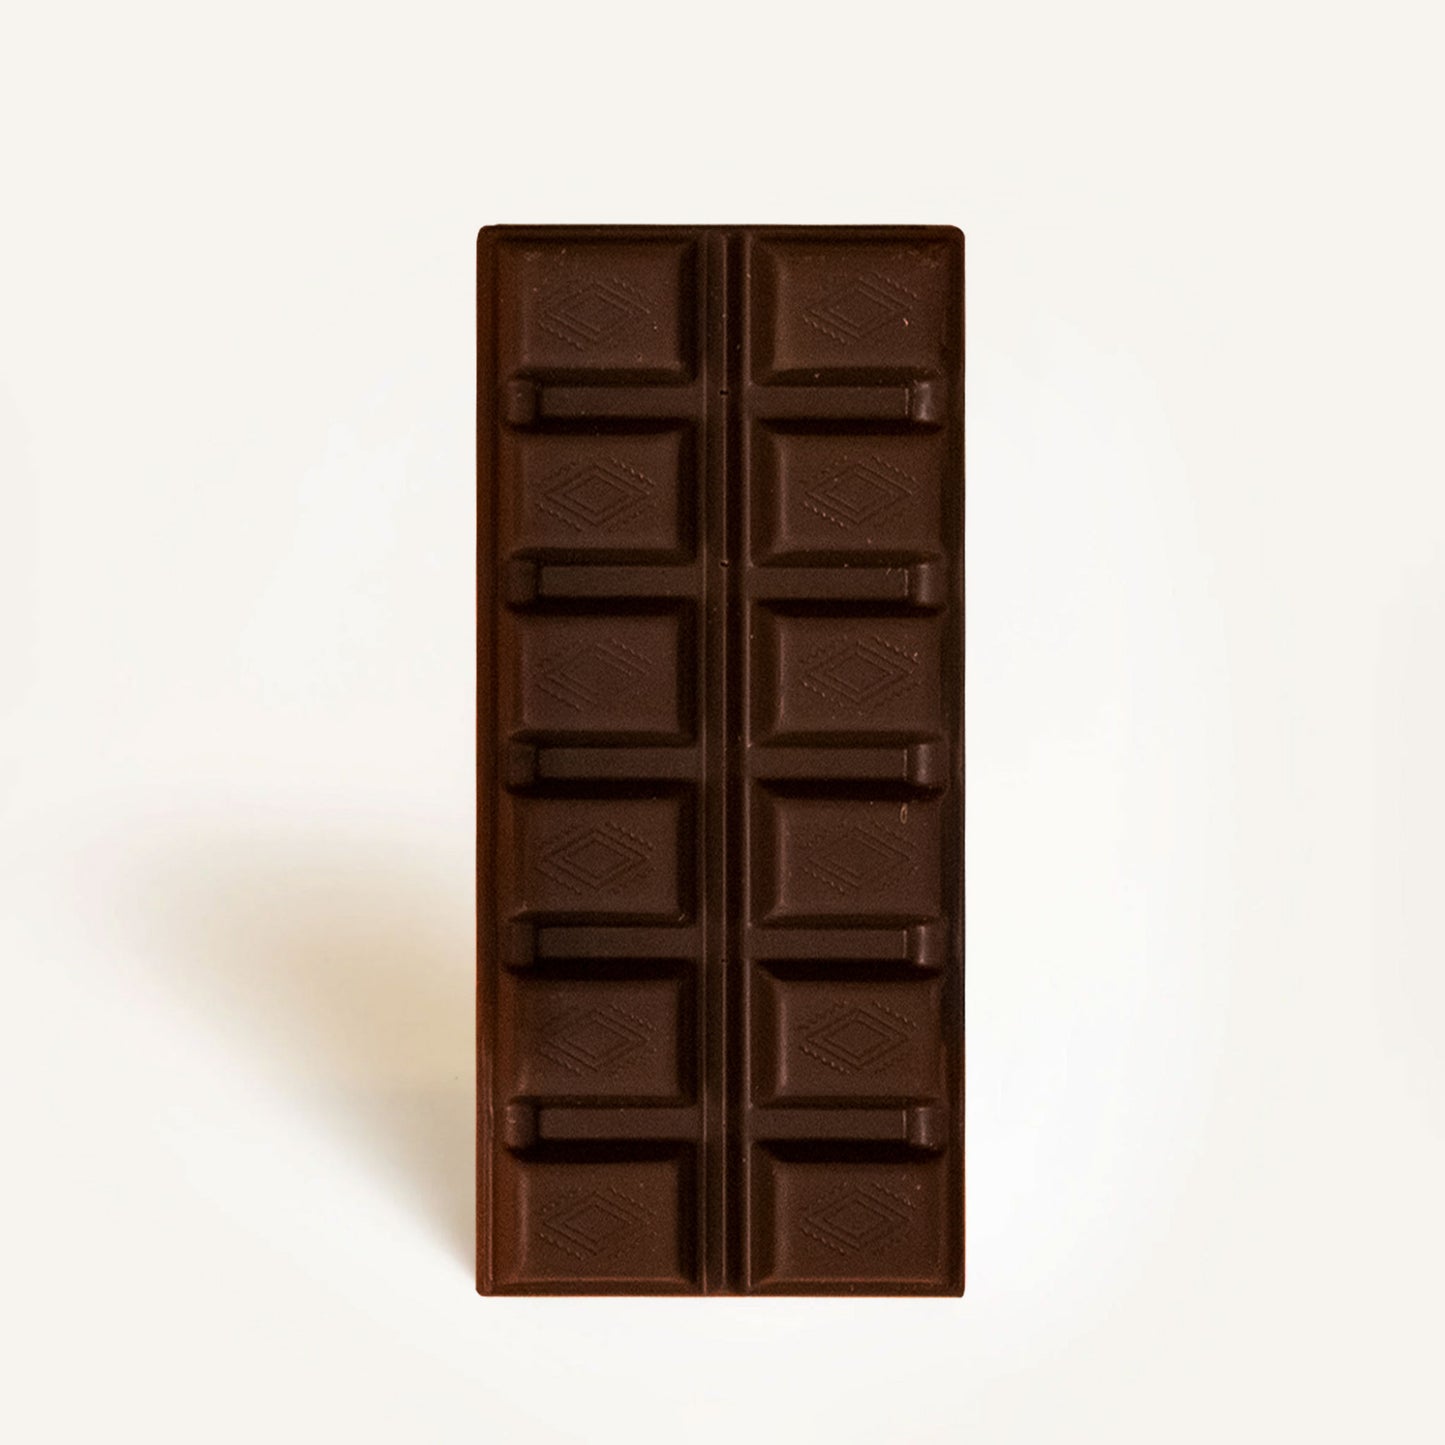 "Gran Cacao" 64% bar